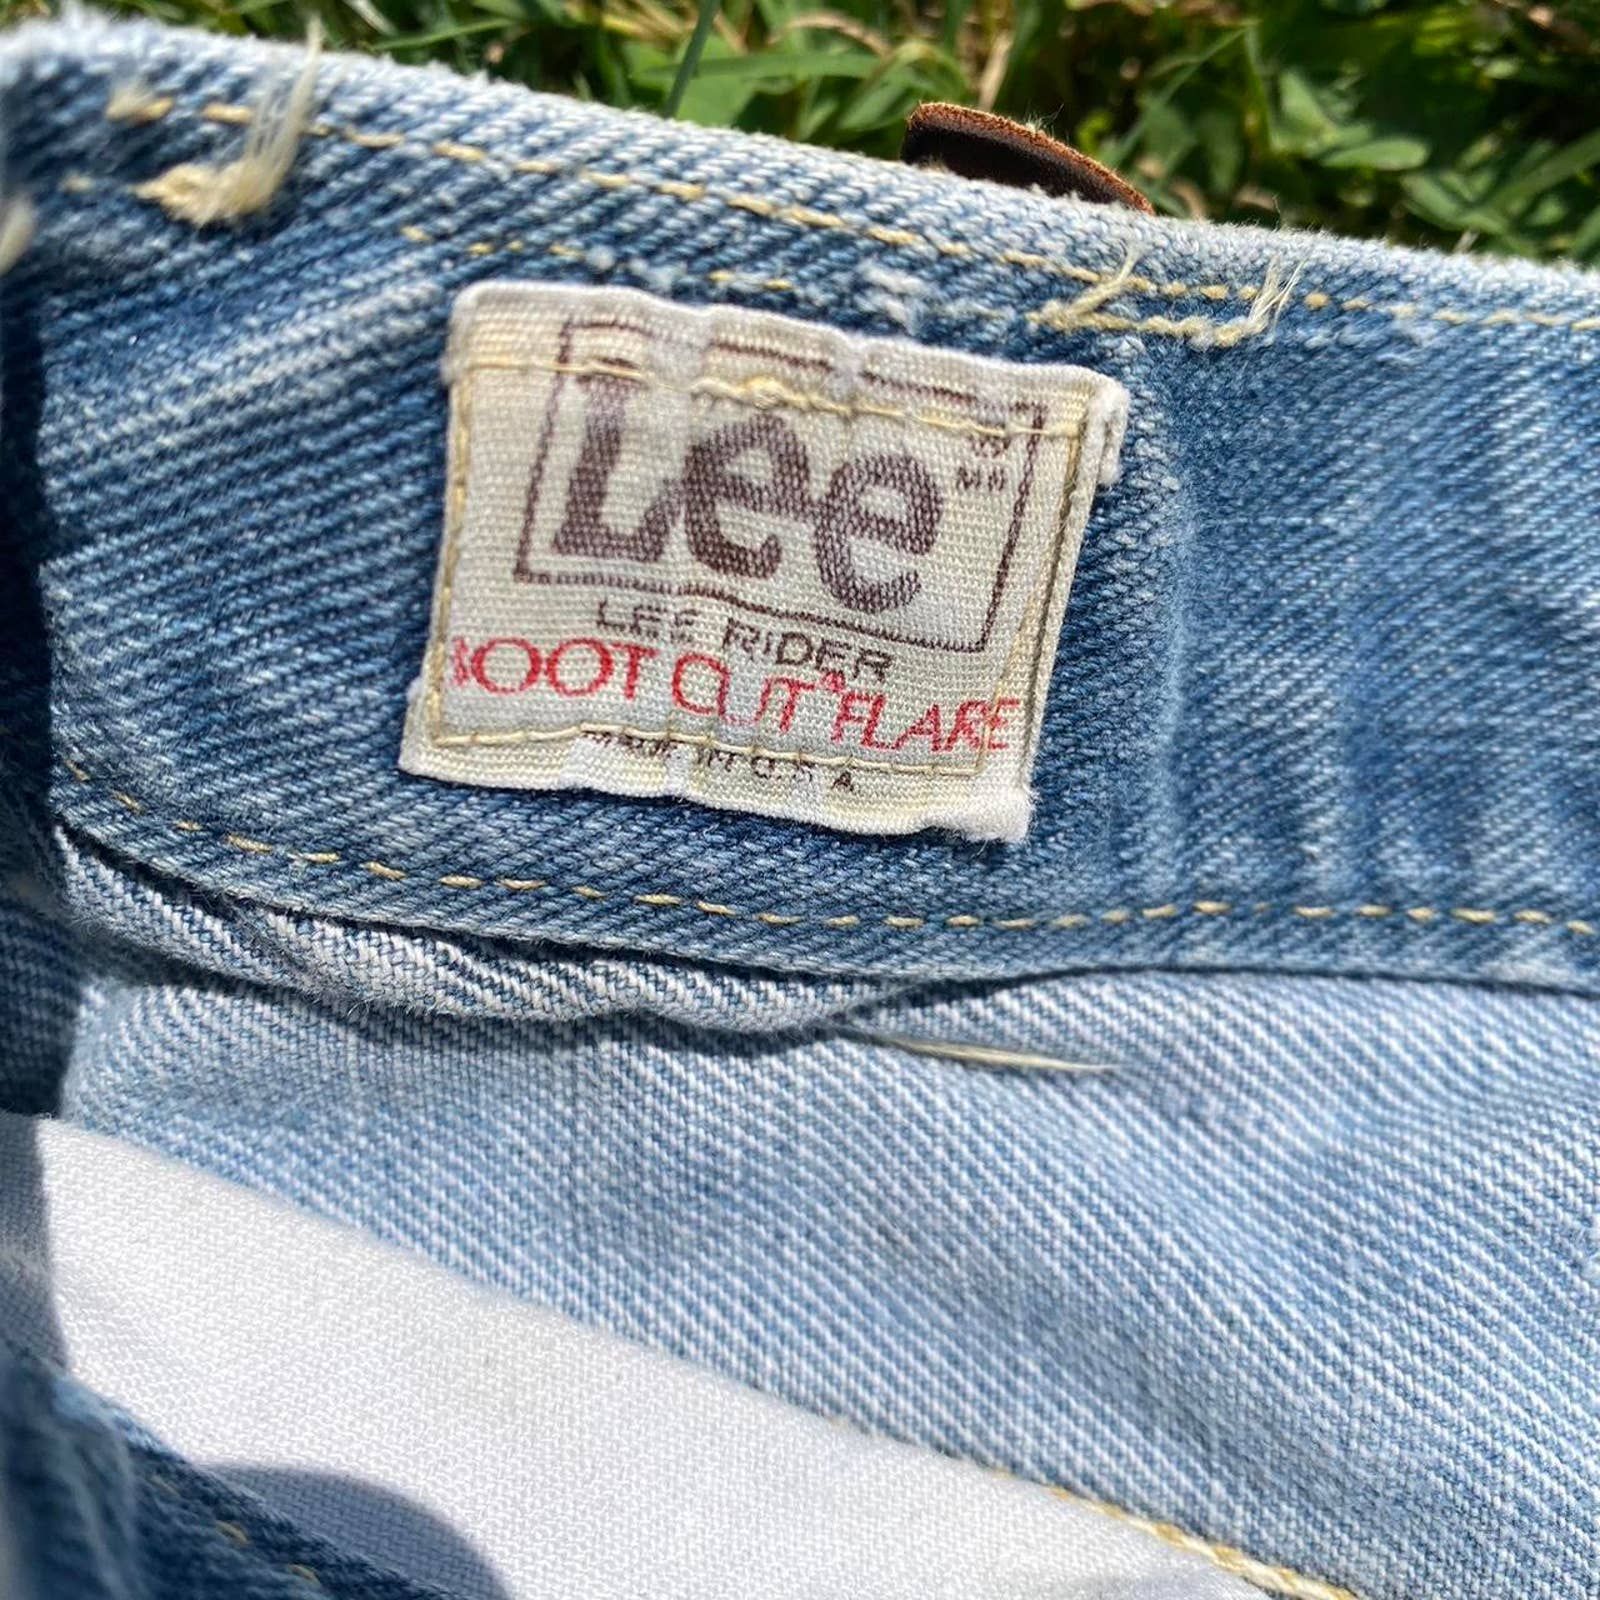 Vintage Vintage 60s Lee Riders Cut Off Jorts Distressed Denim Shorts Size US 31 - 5 Thumbnail